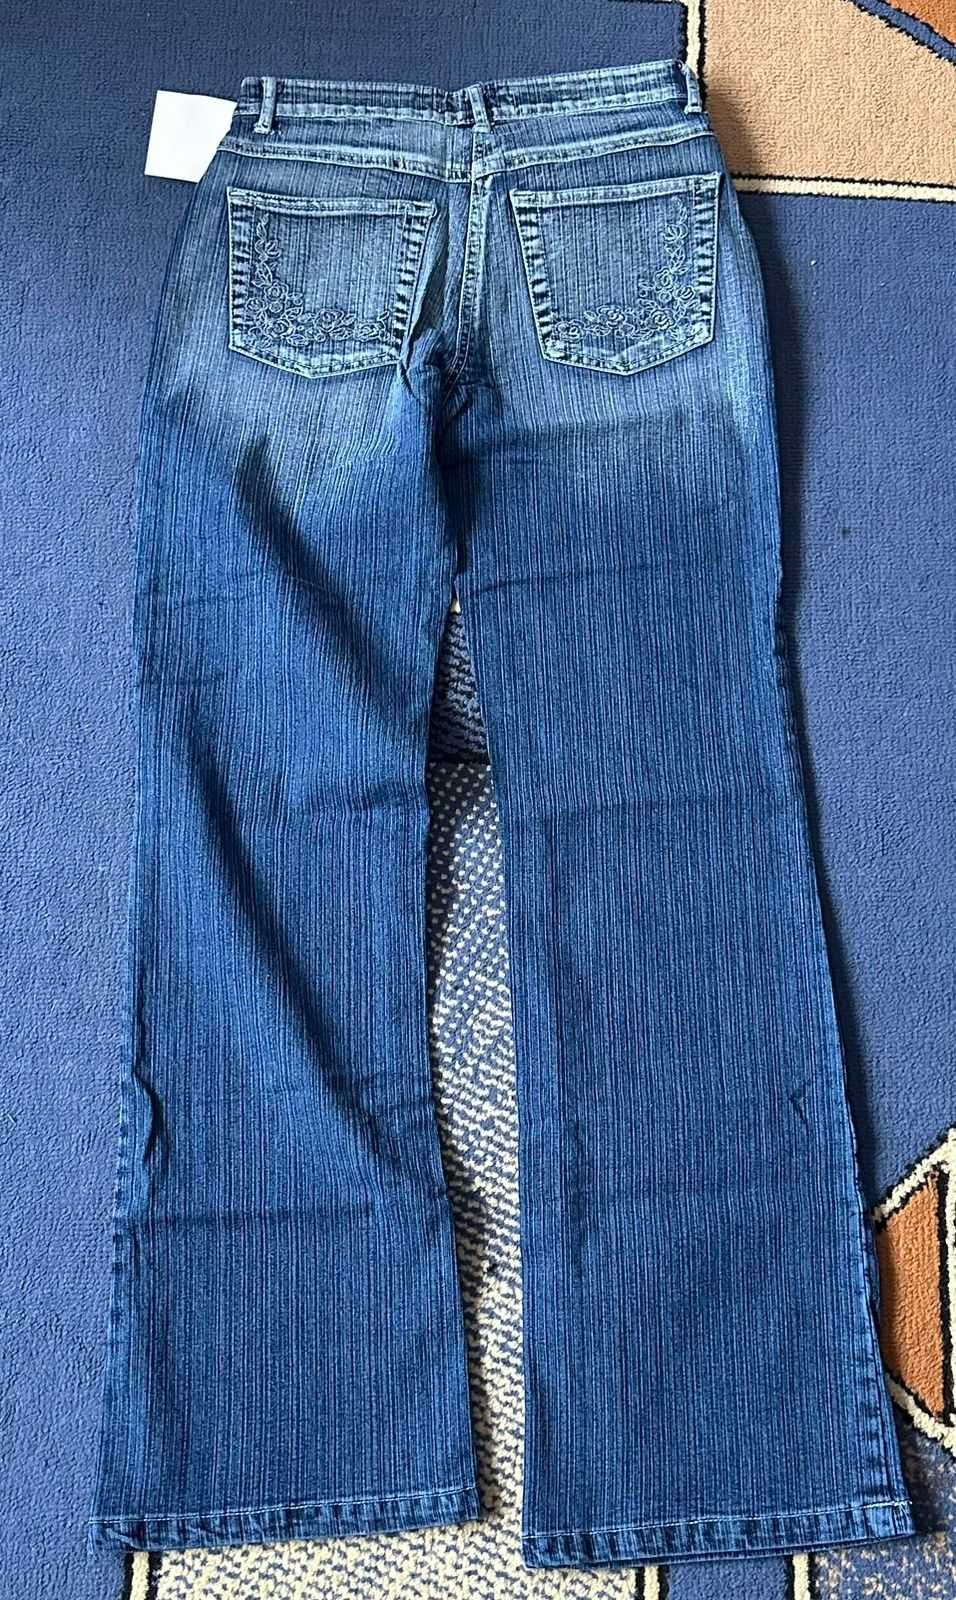 Стильні джинси кльош